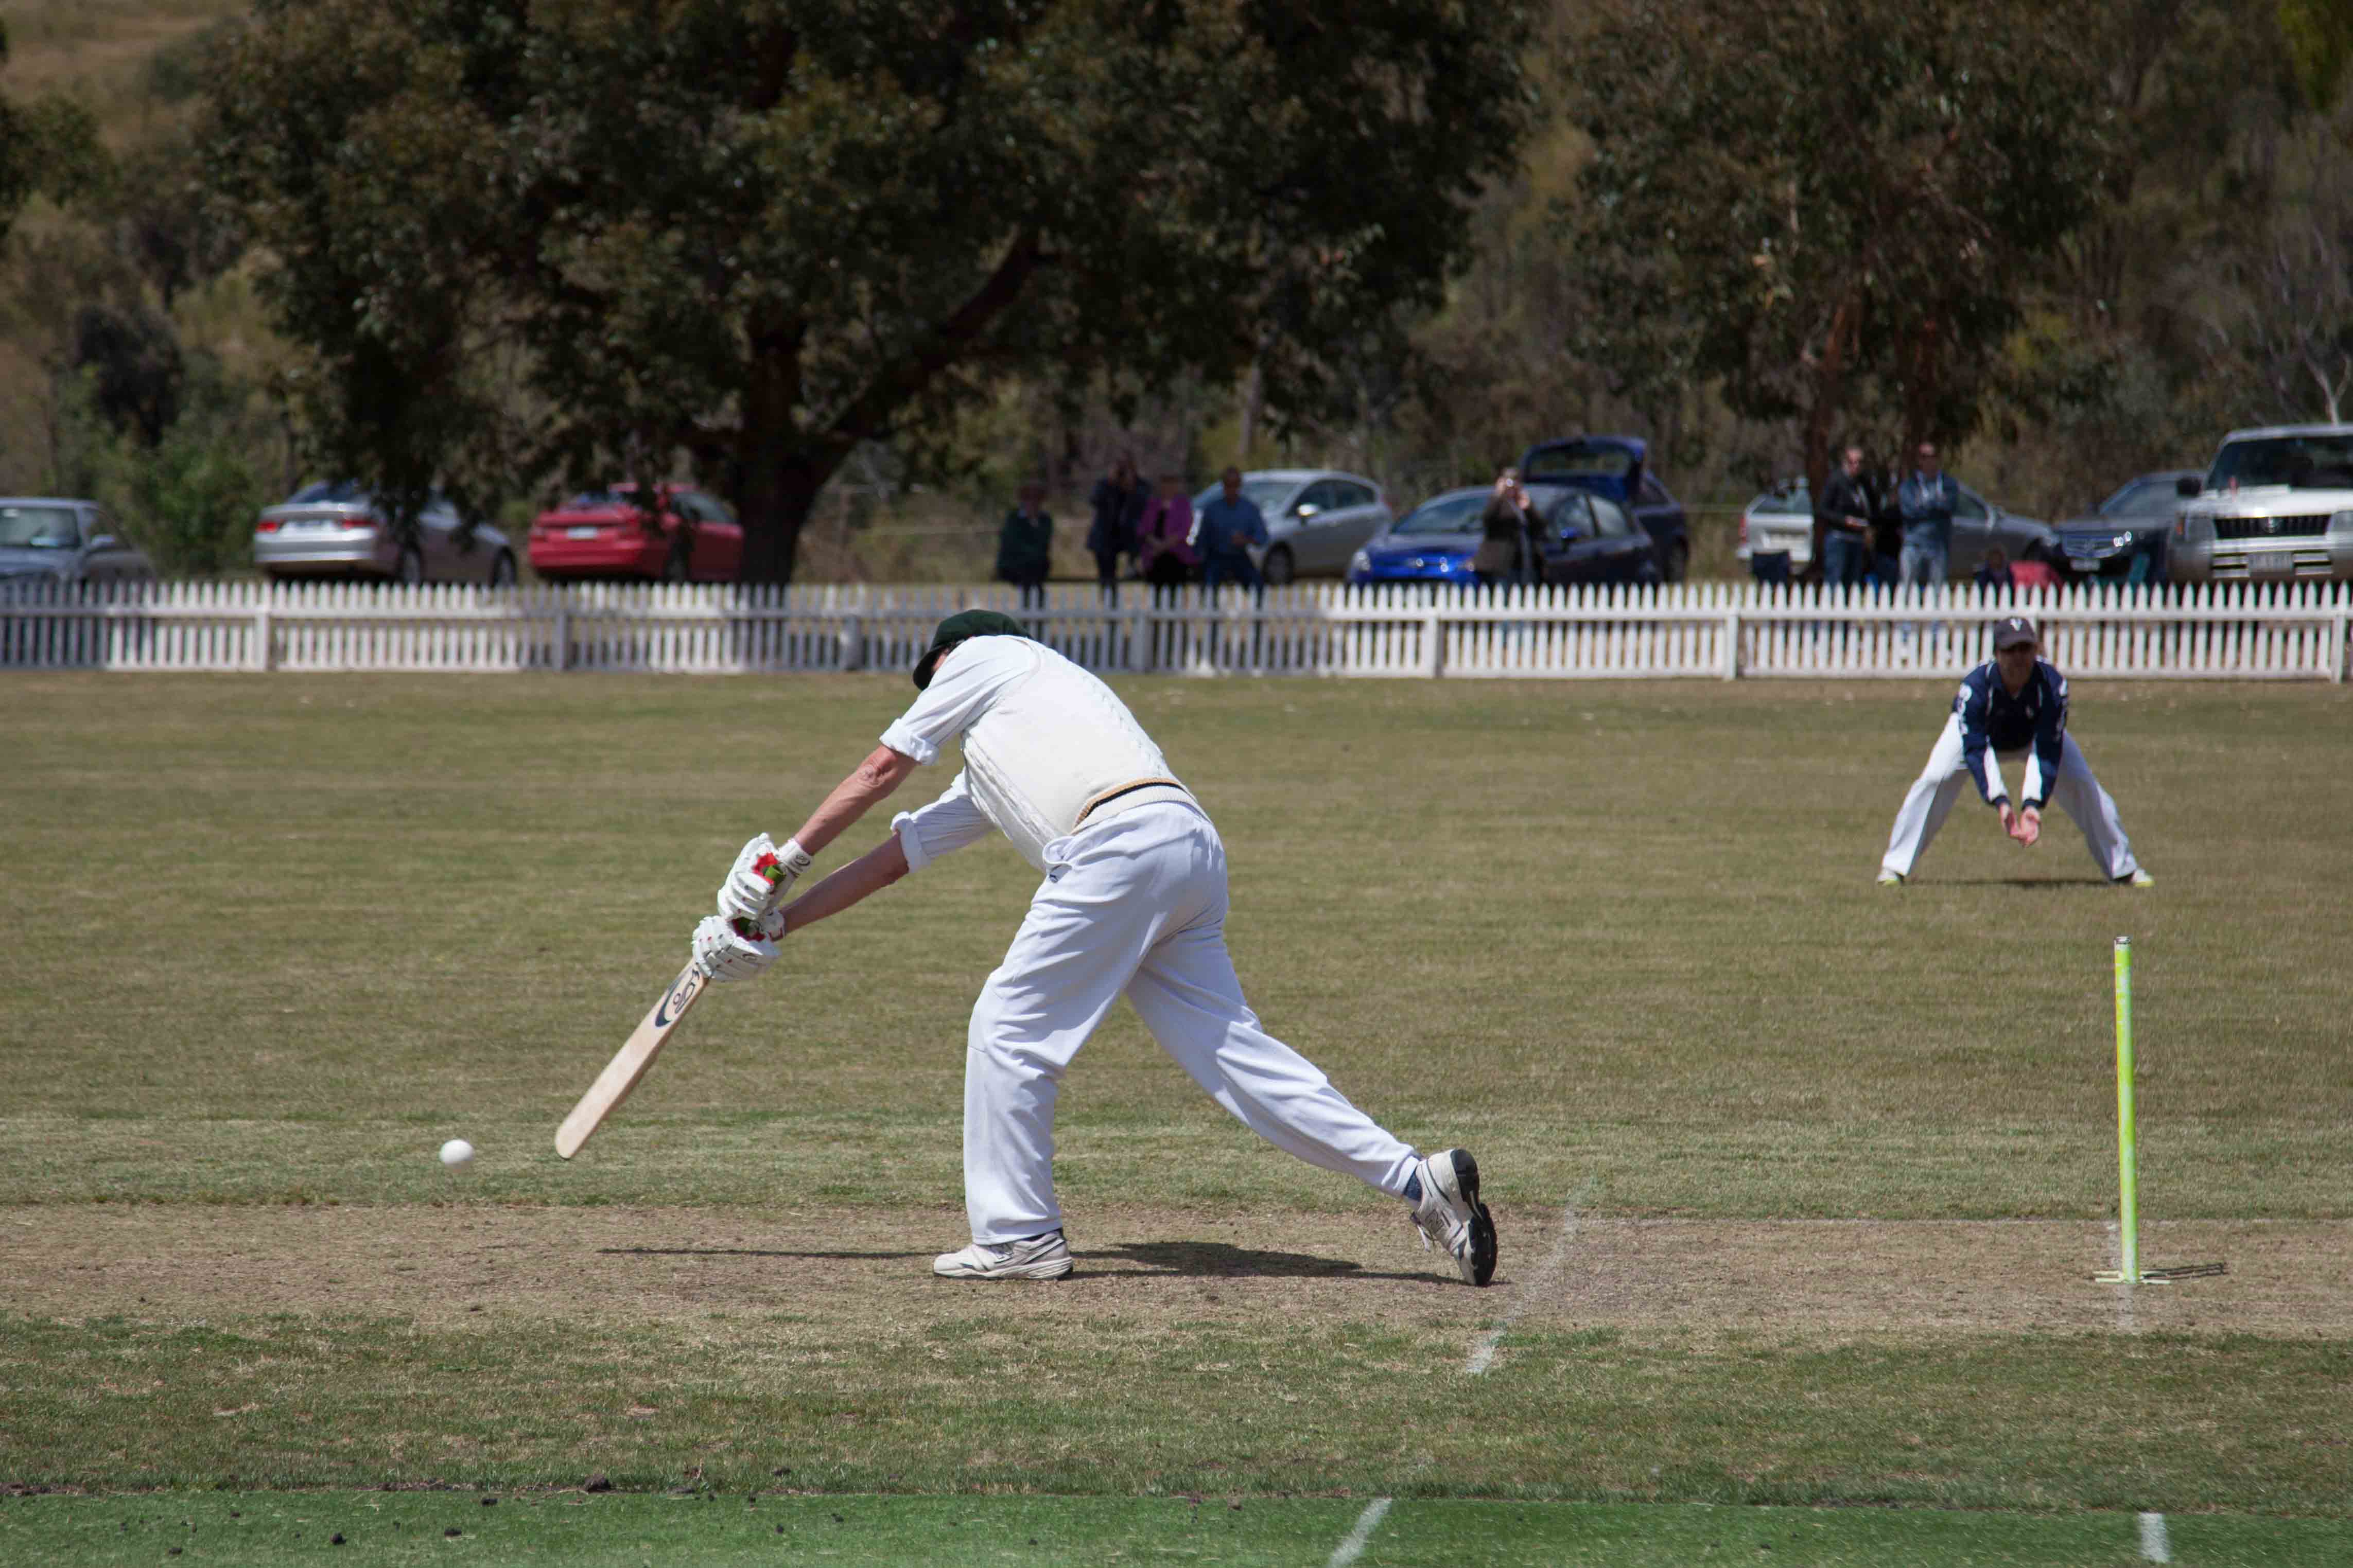 A cricket player hits a cricket ball.